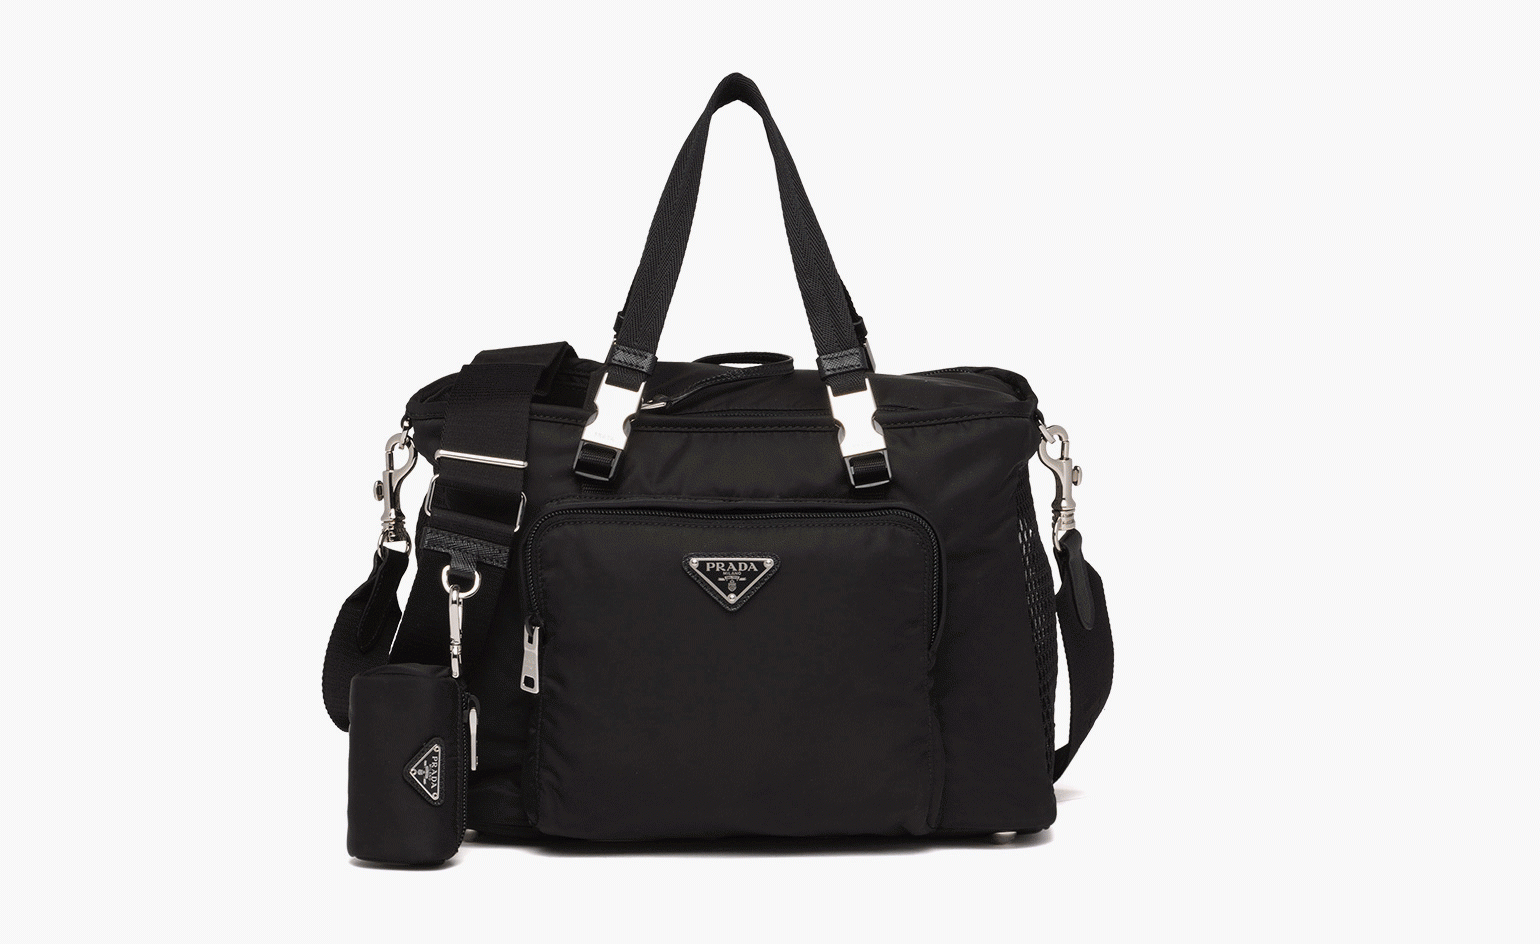 Pet bag, by Prada. A black bag with hand carry straps and over shoulder straps.